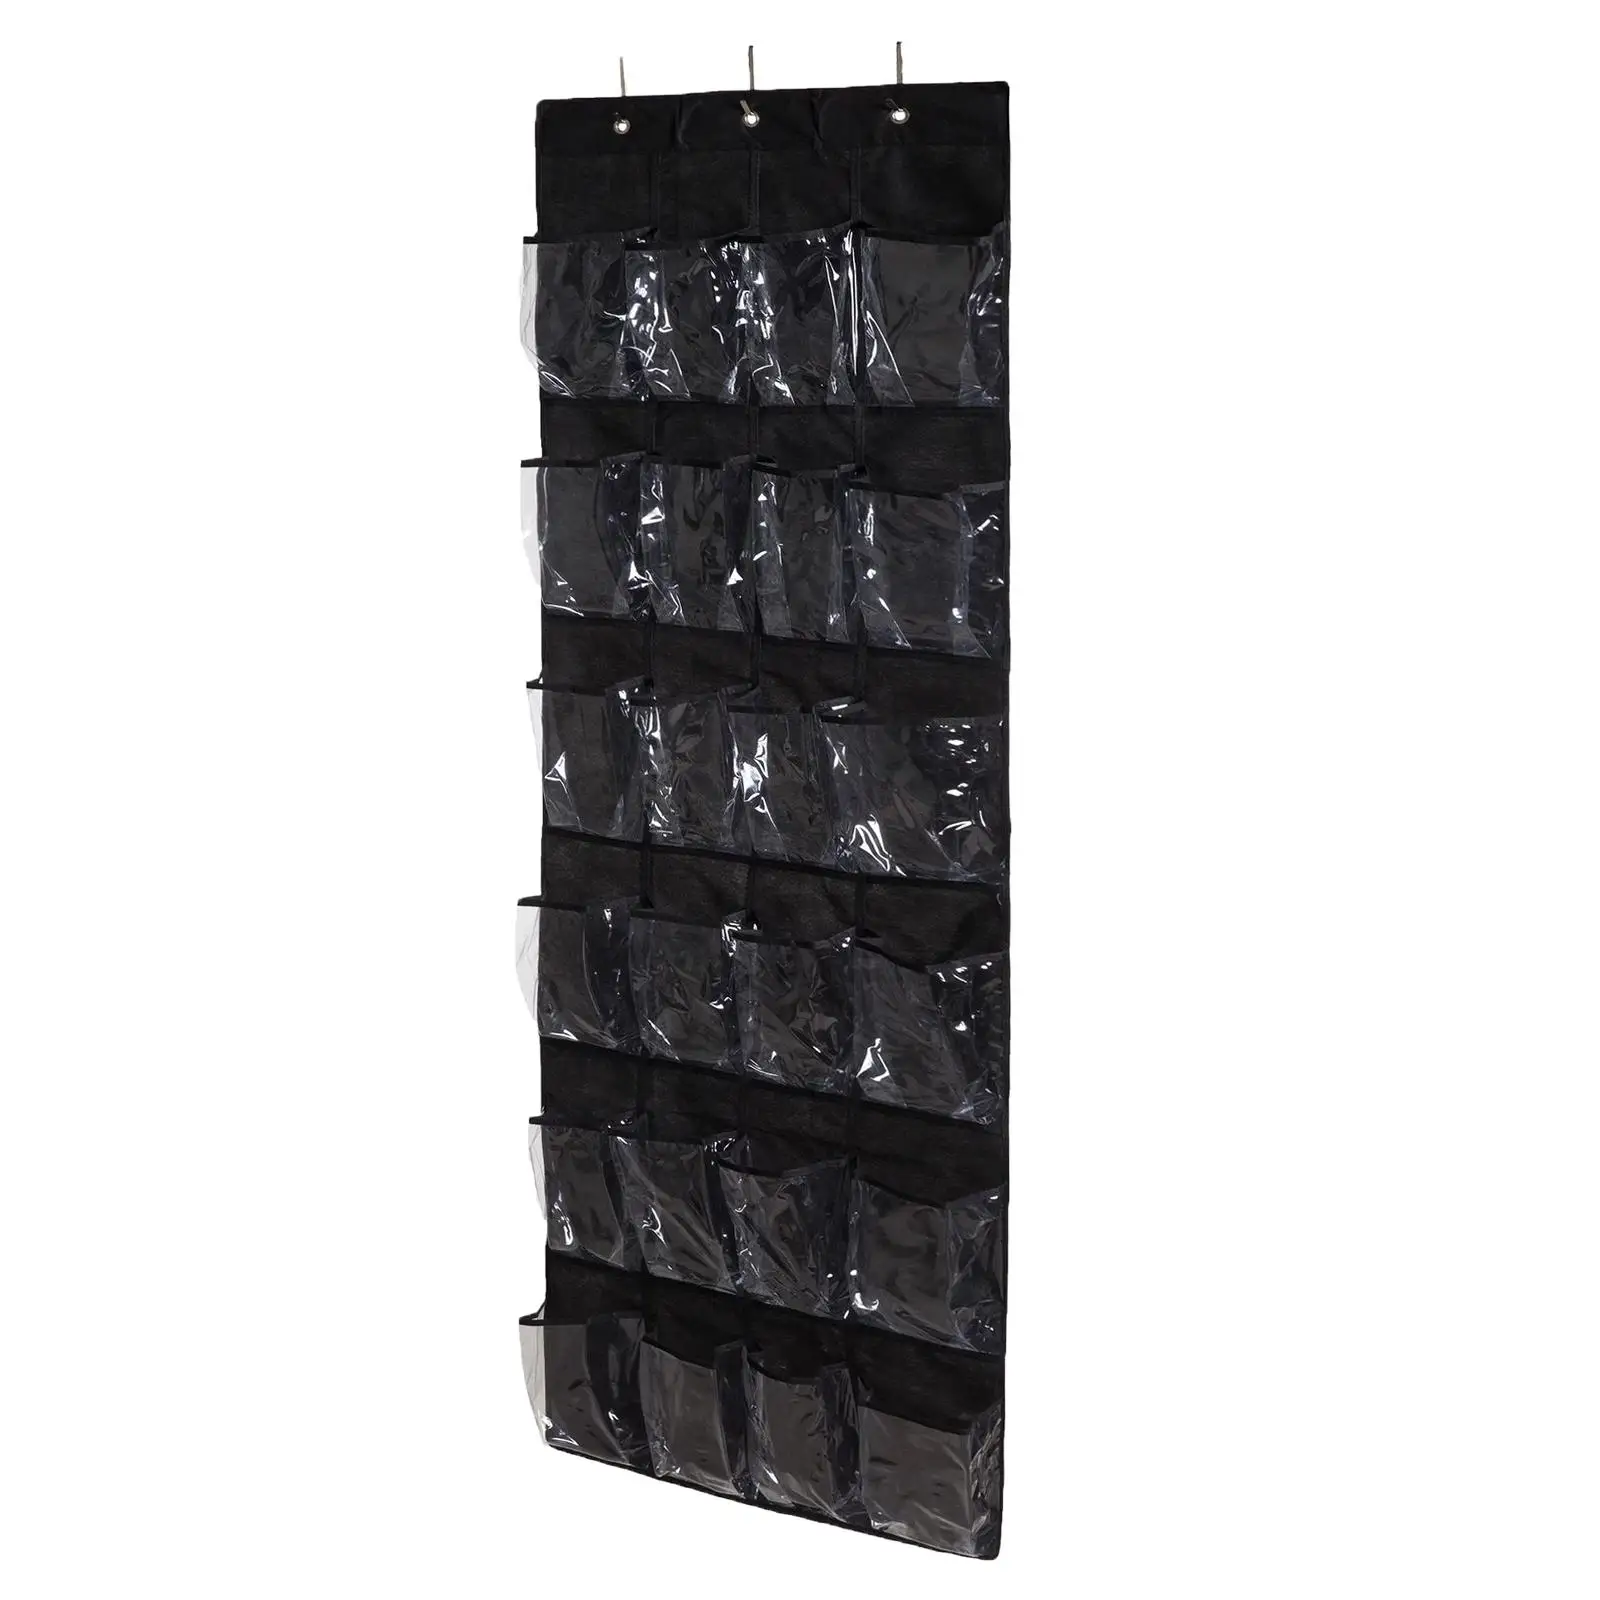 24 Pocket Shoe Space Door Hanging Organizer Rack Wall Bag Storage Closet Holder Accessories Hanging Bags